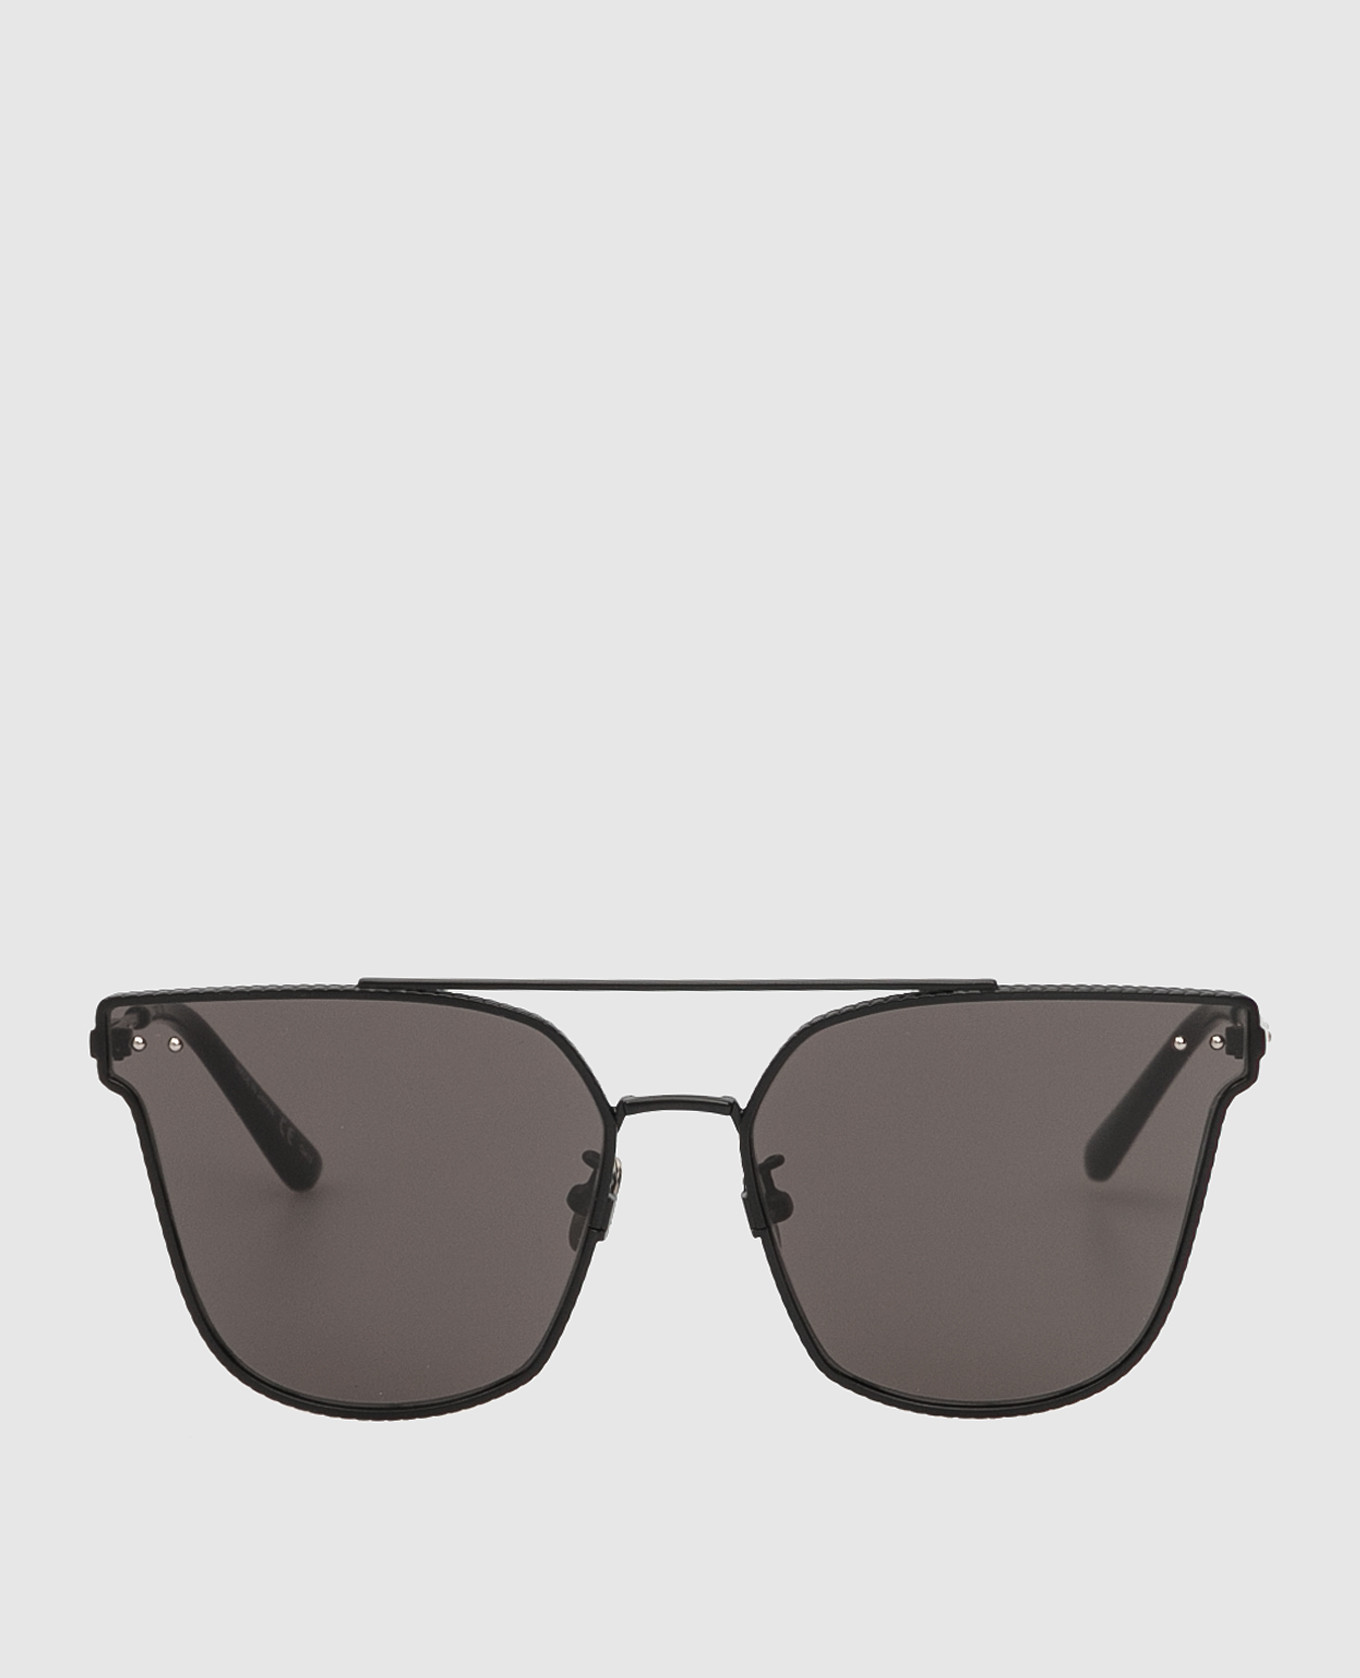 Thin frame sunglasses